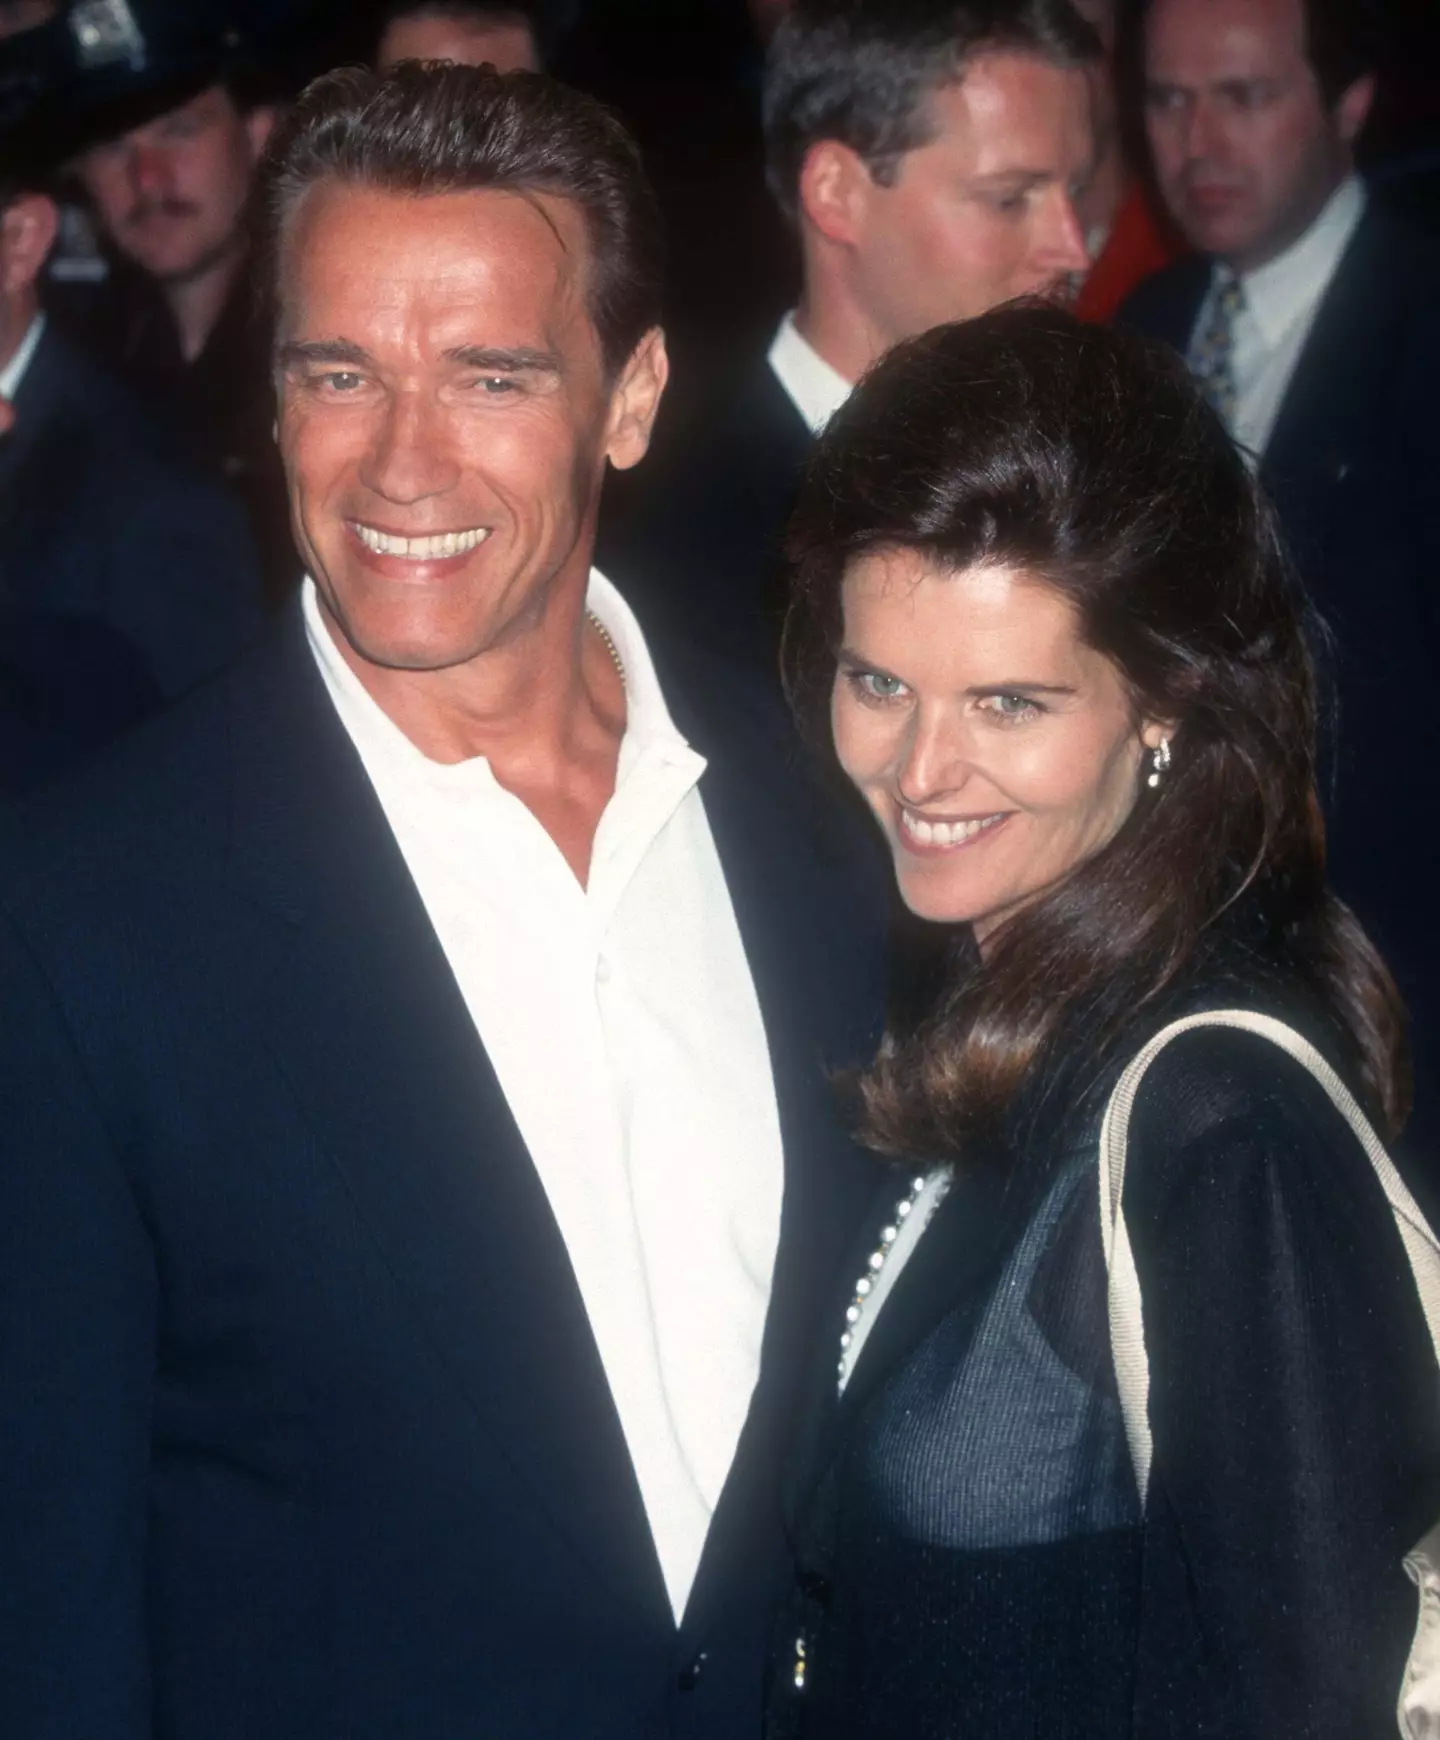 Arnold Schwarzenegger married Maria Shriver in 1986.